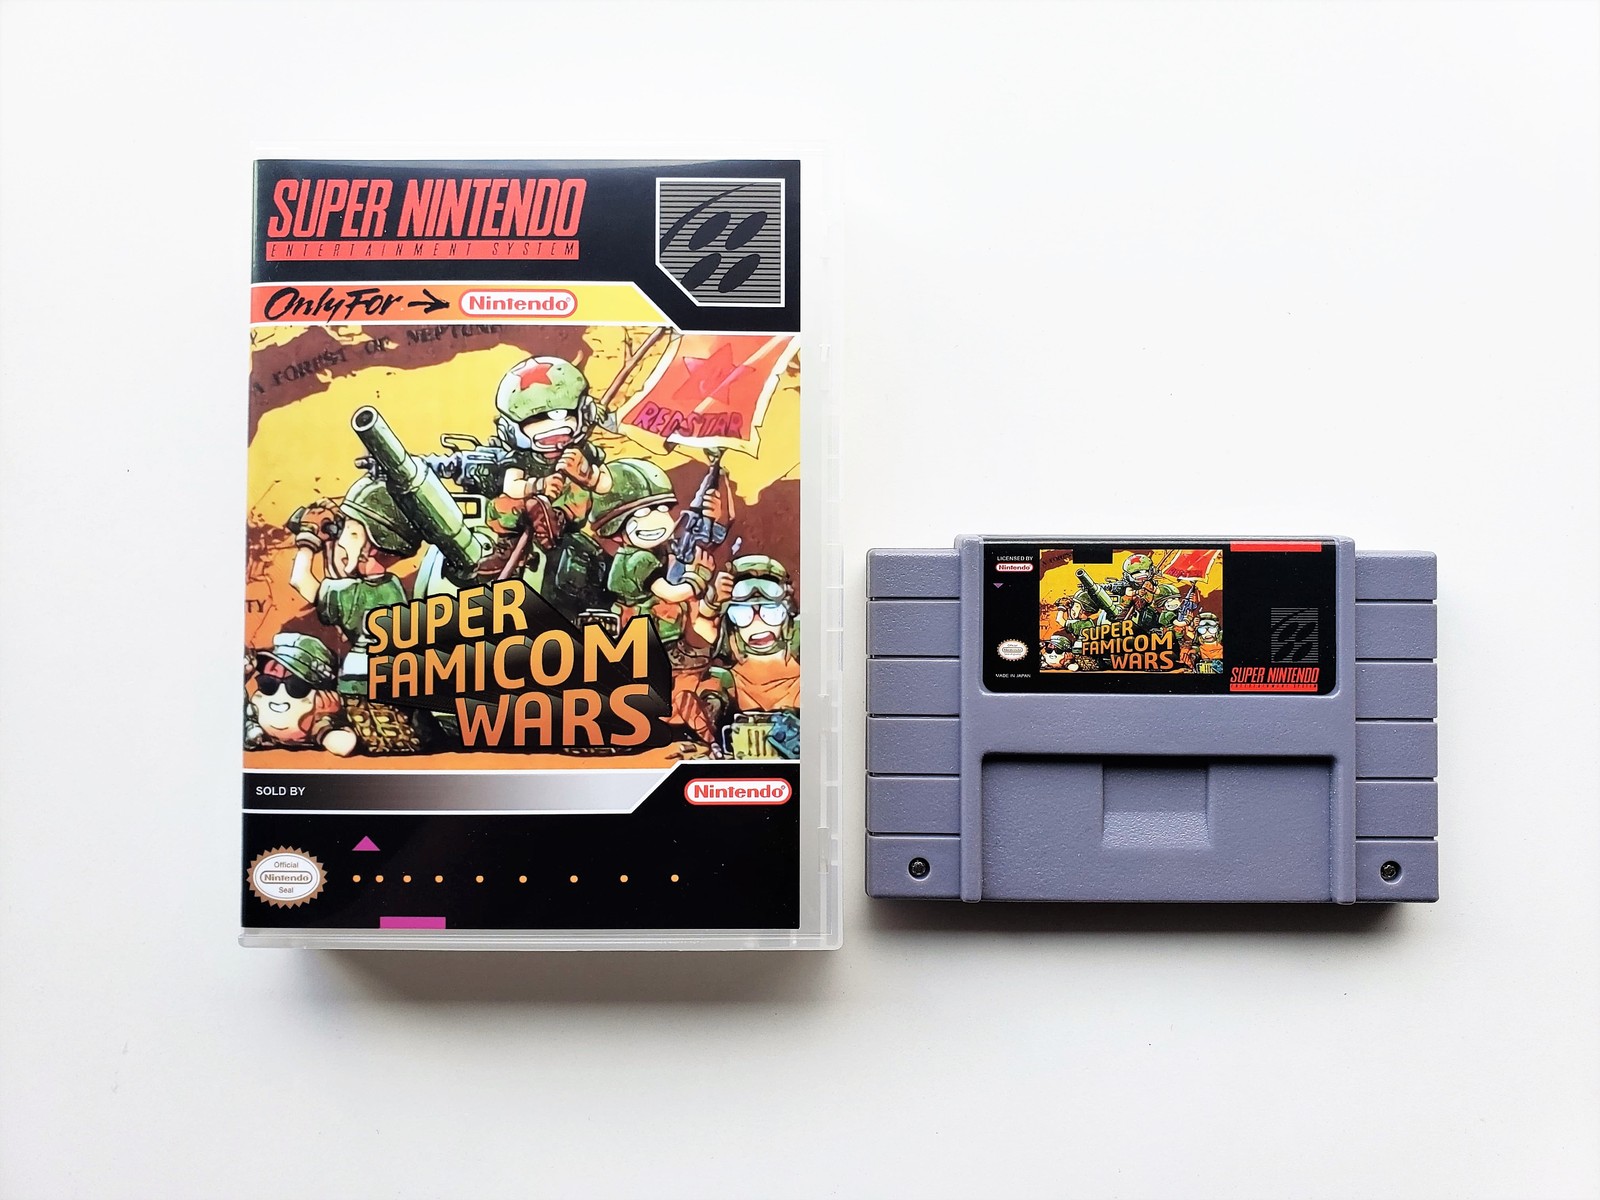 Super Famicom Wars Super Nintendo (SNES) English Translated (aka Advanced Wars)